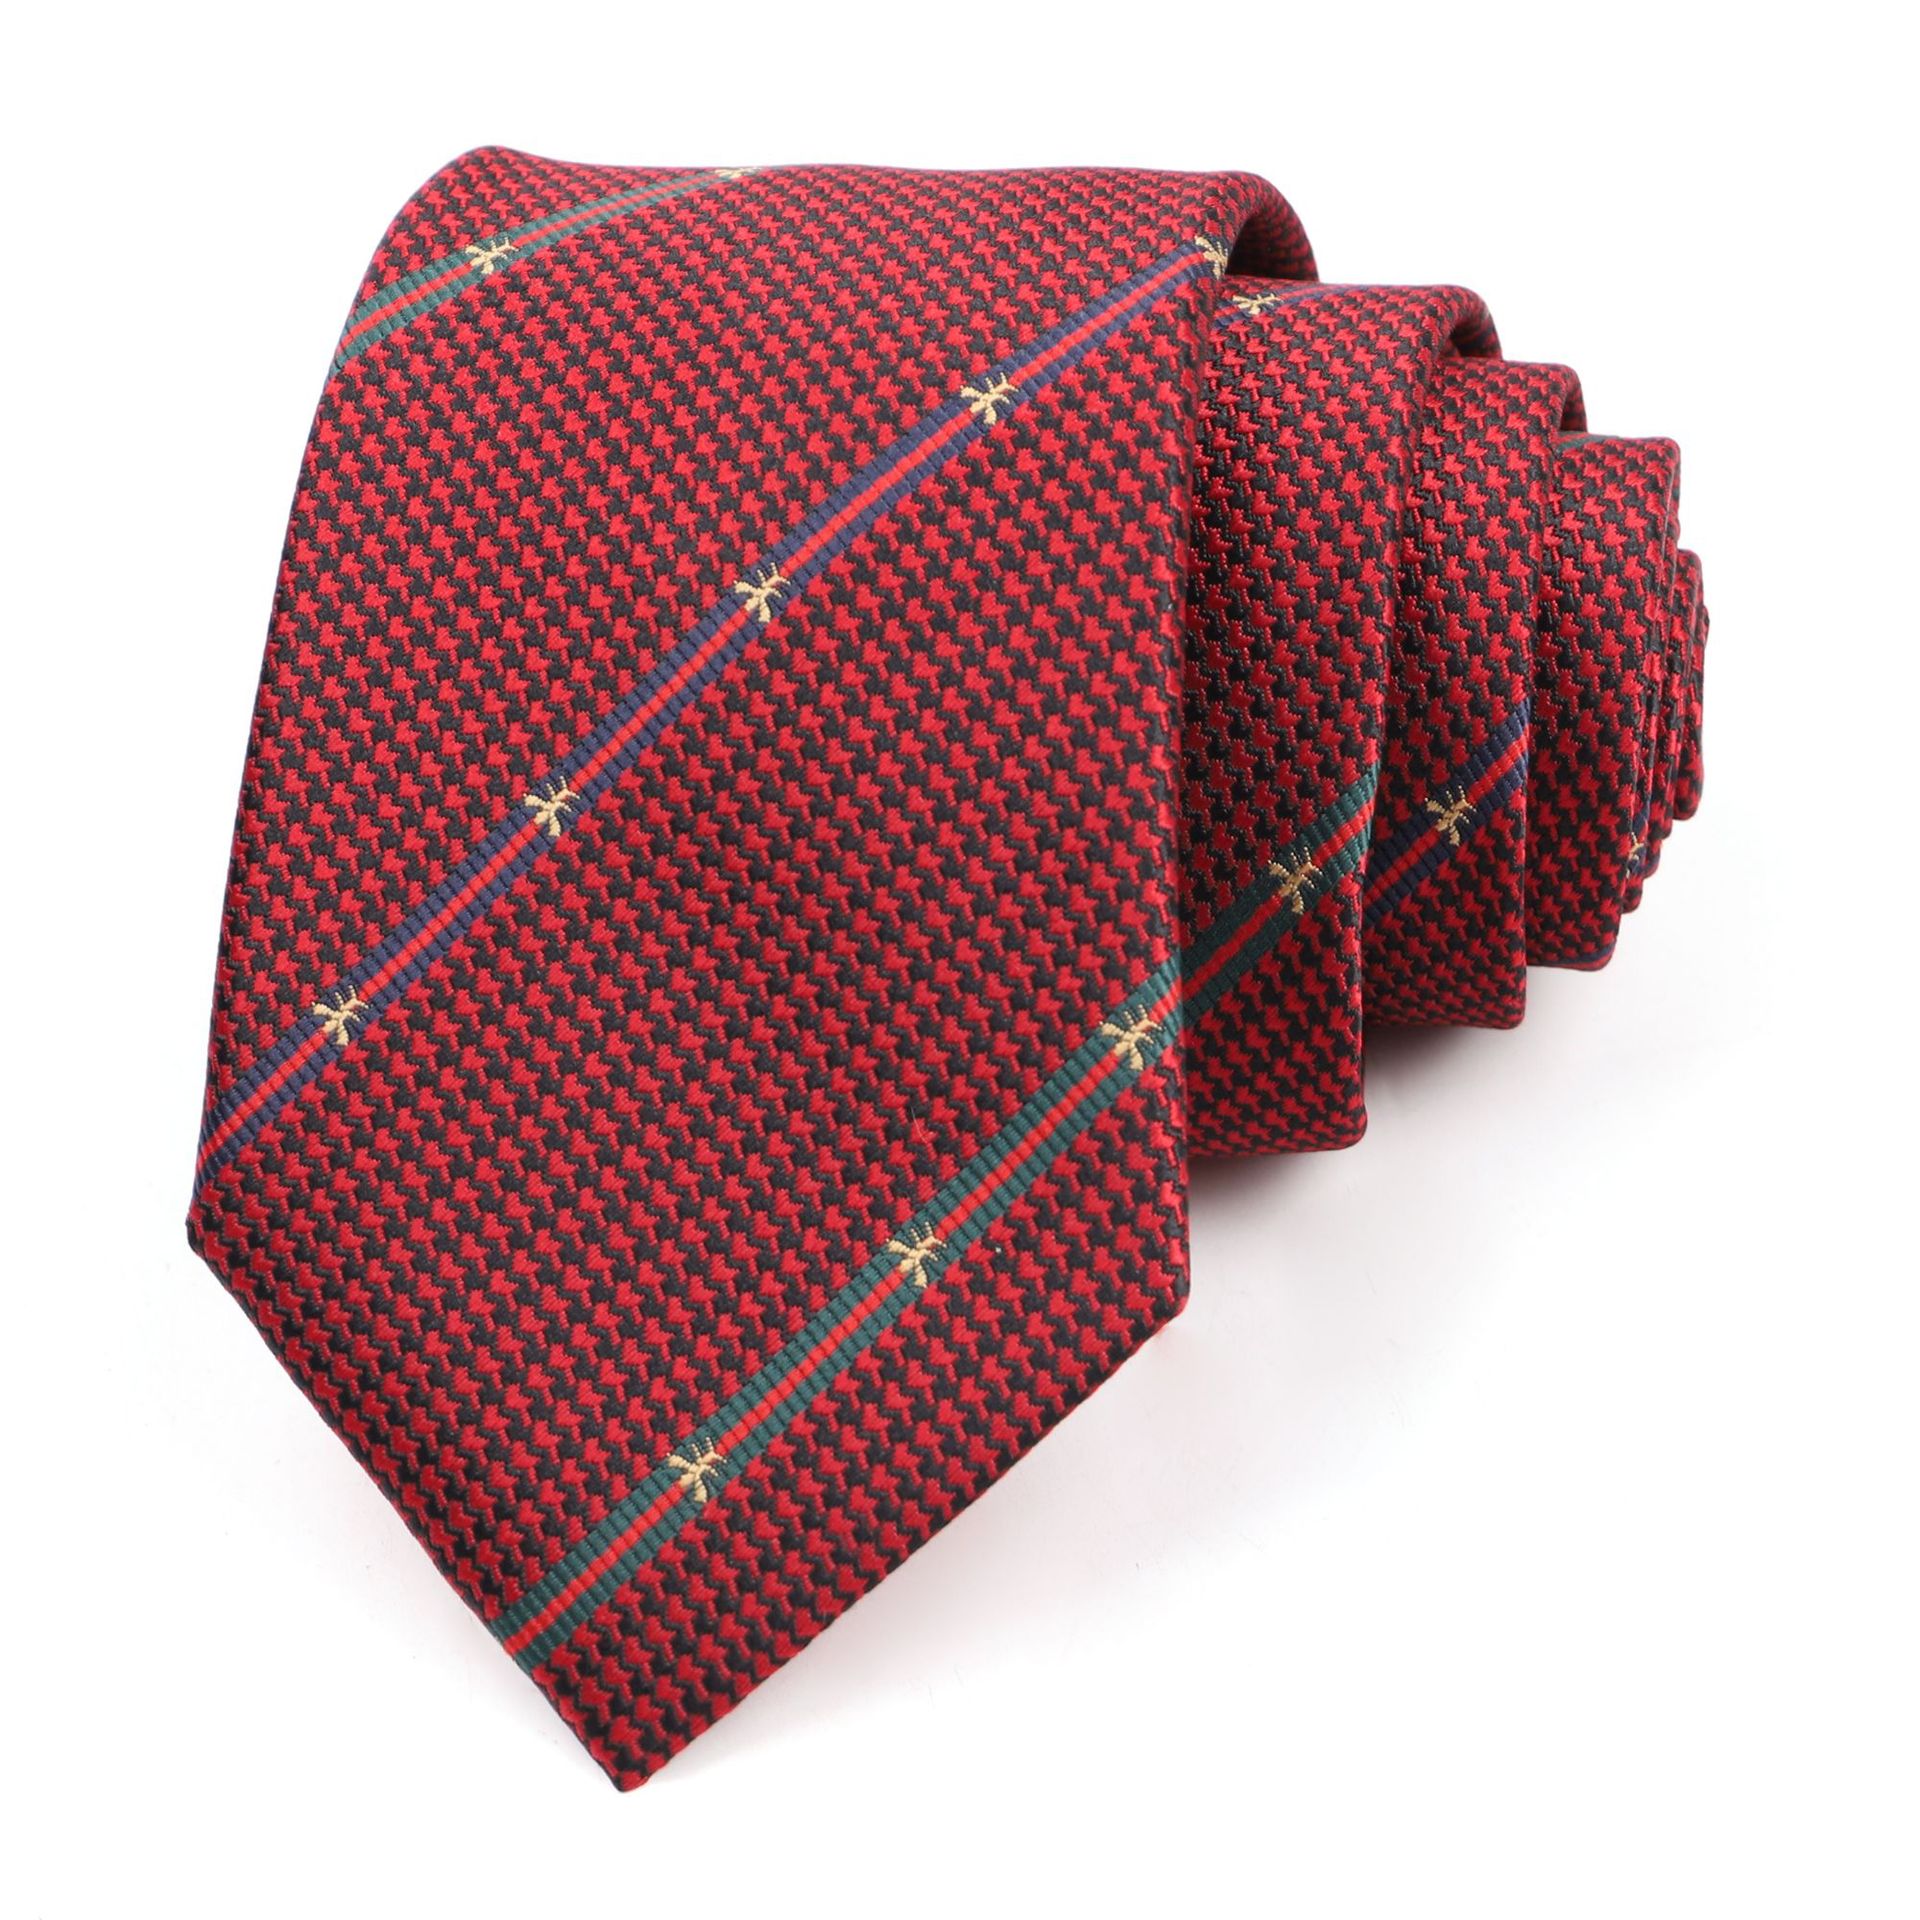 Casual business men's tie fashion embroidery tie men's bee tie men's tie wholesale LOGO